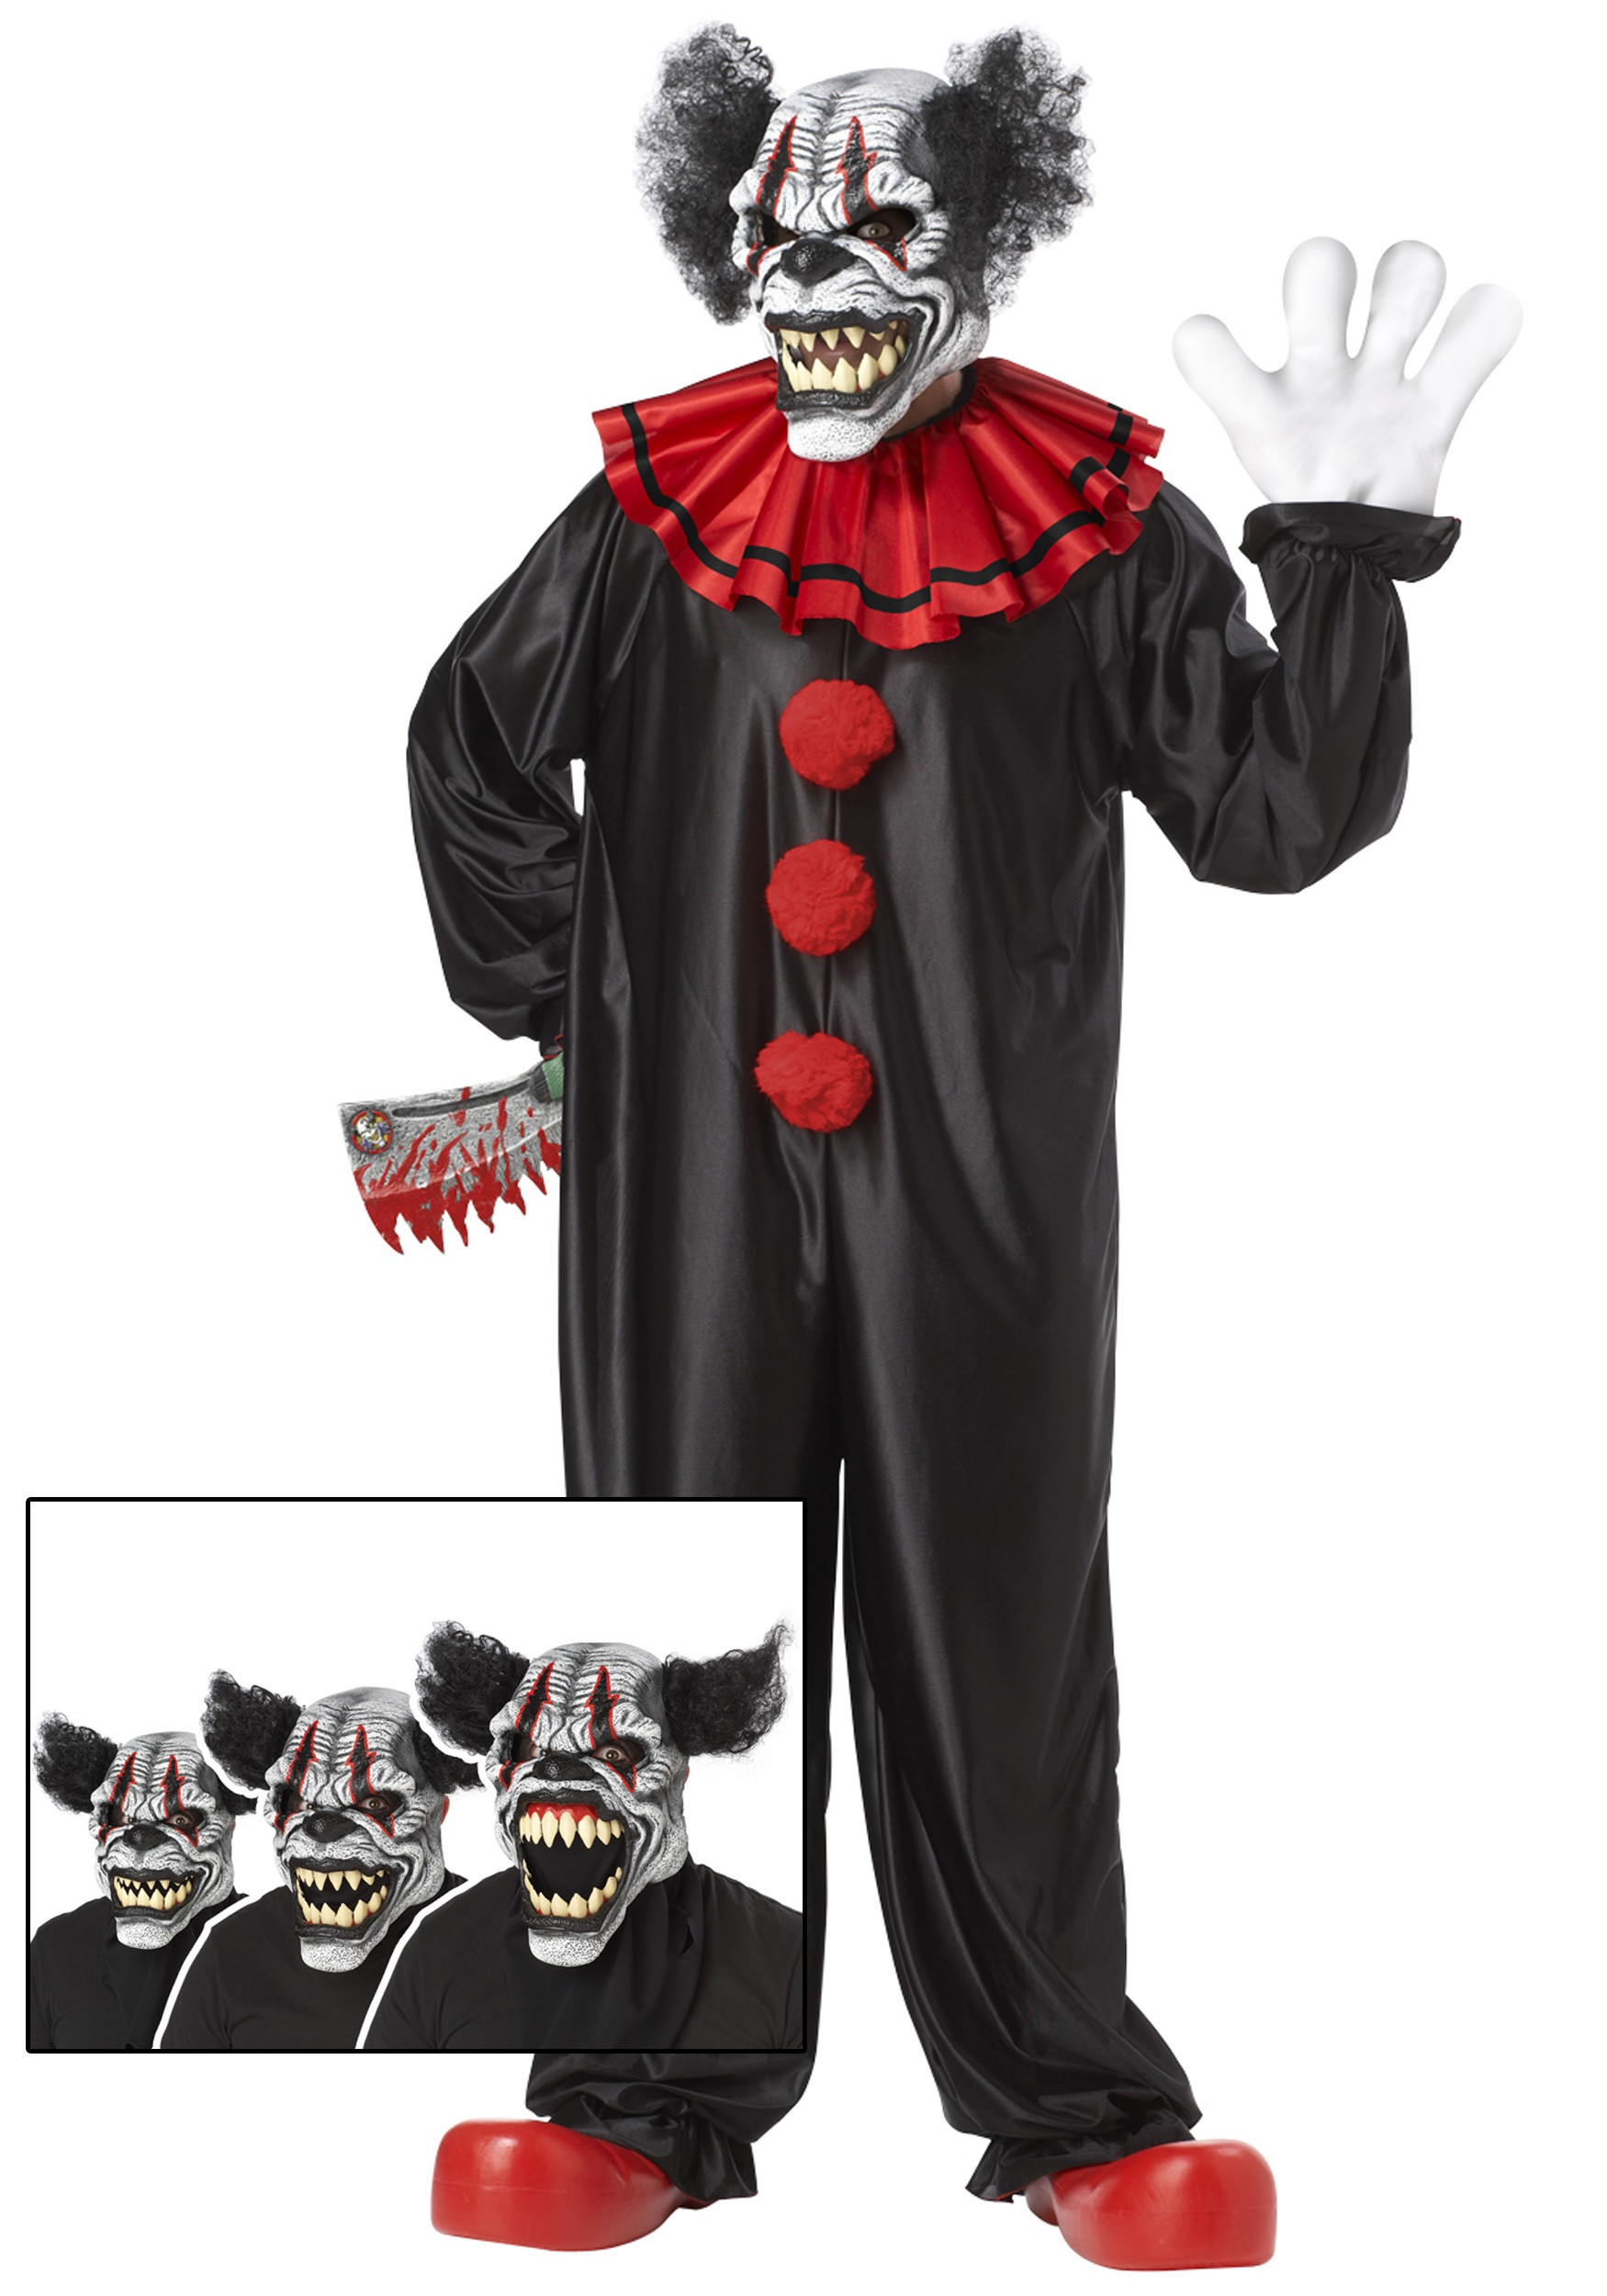 Creepy Halloween Costume Ideas
 Last Laugh Clown Costume